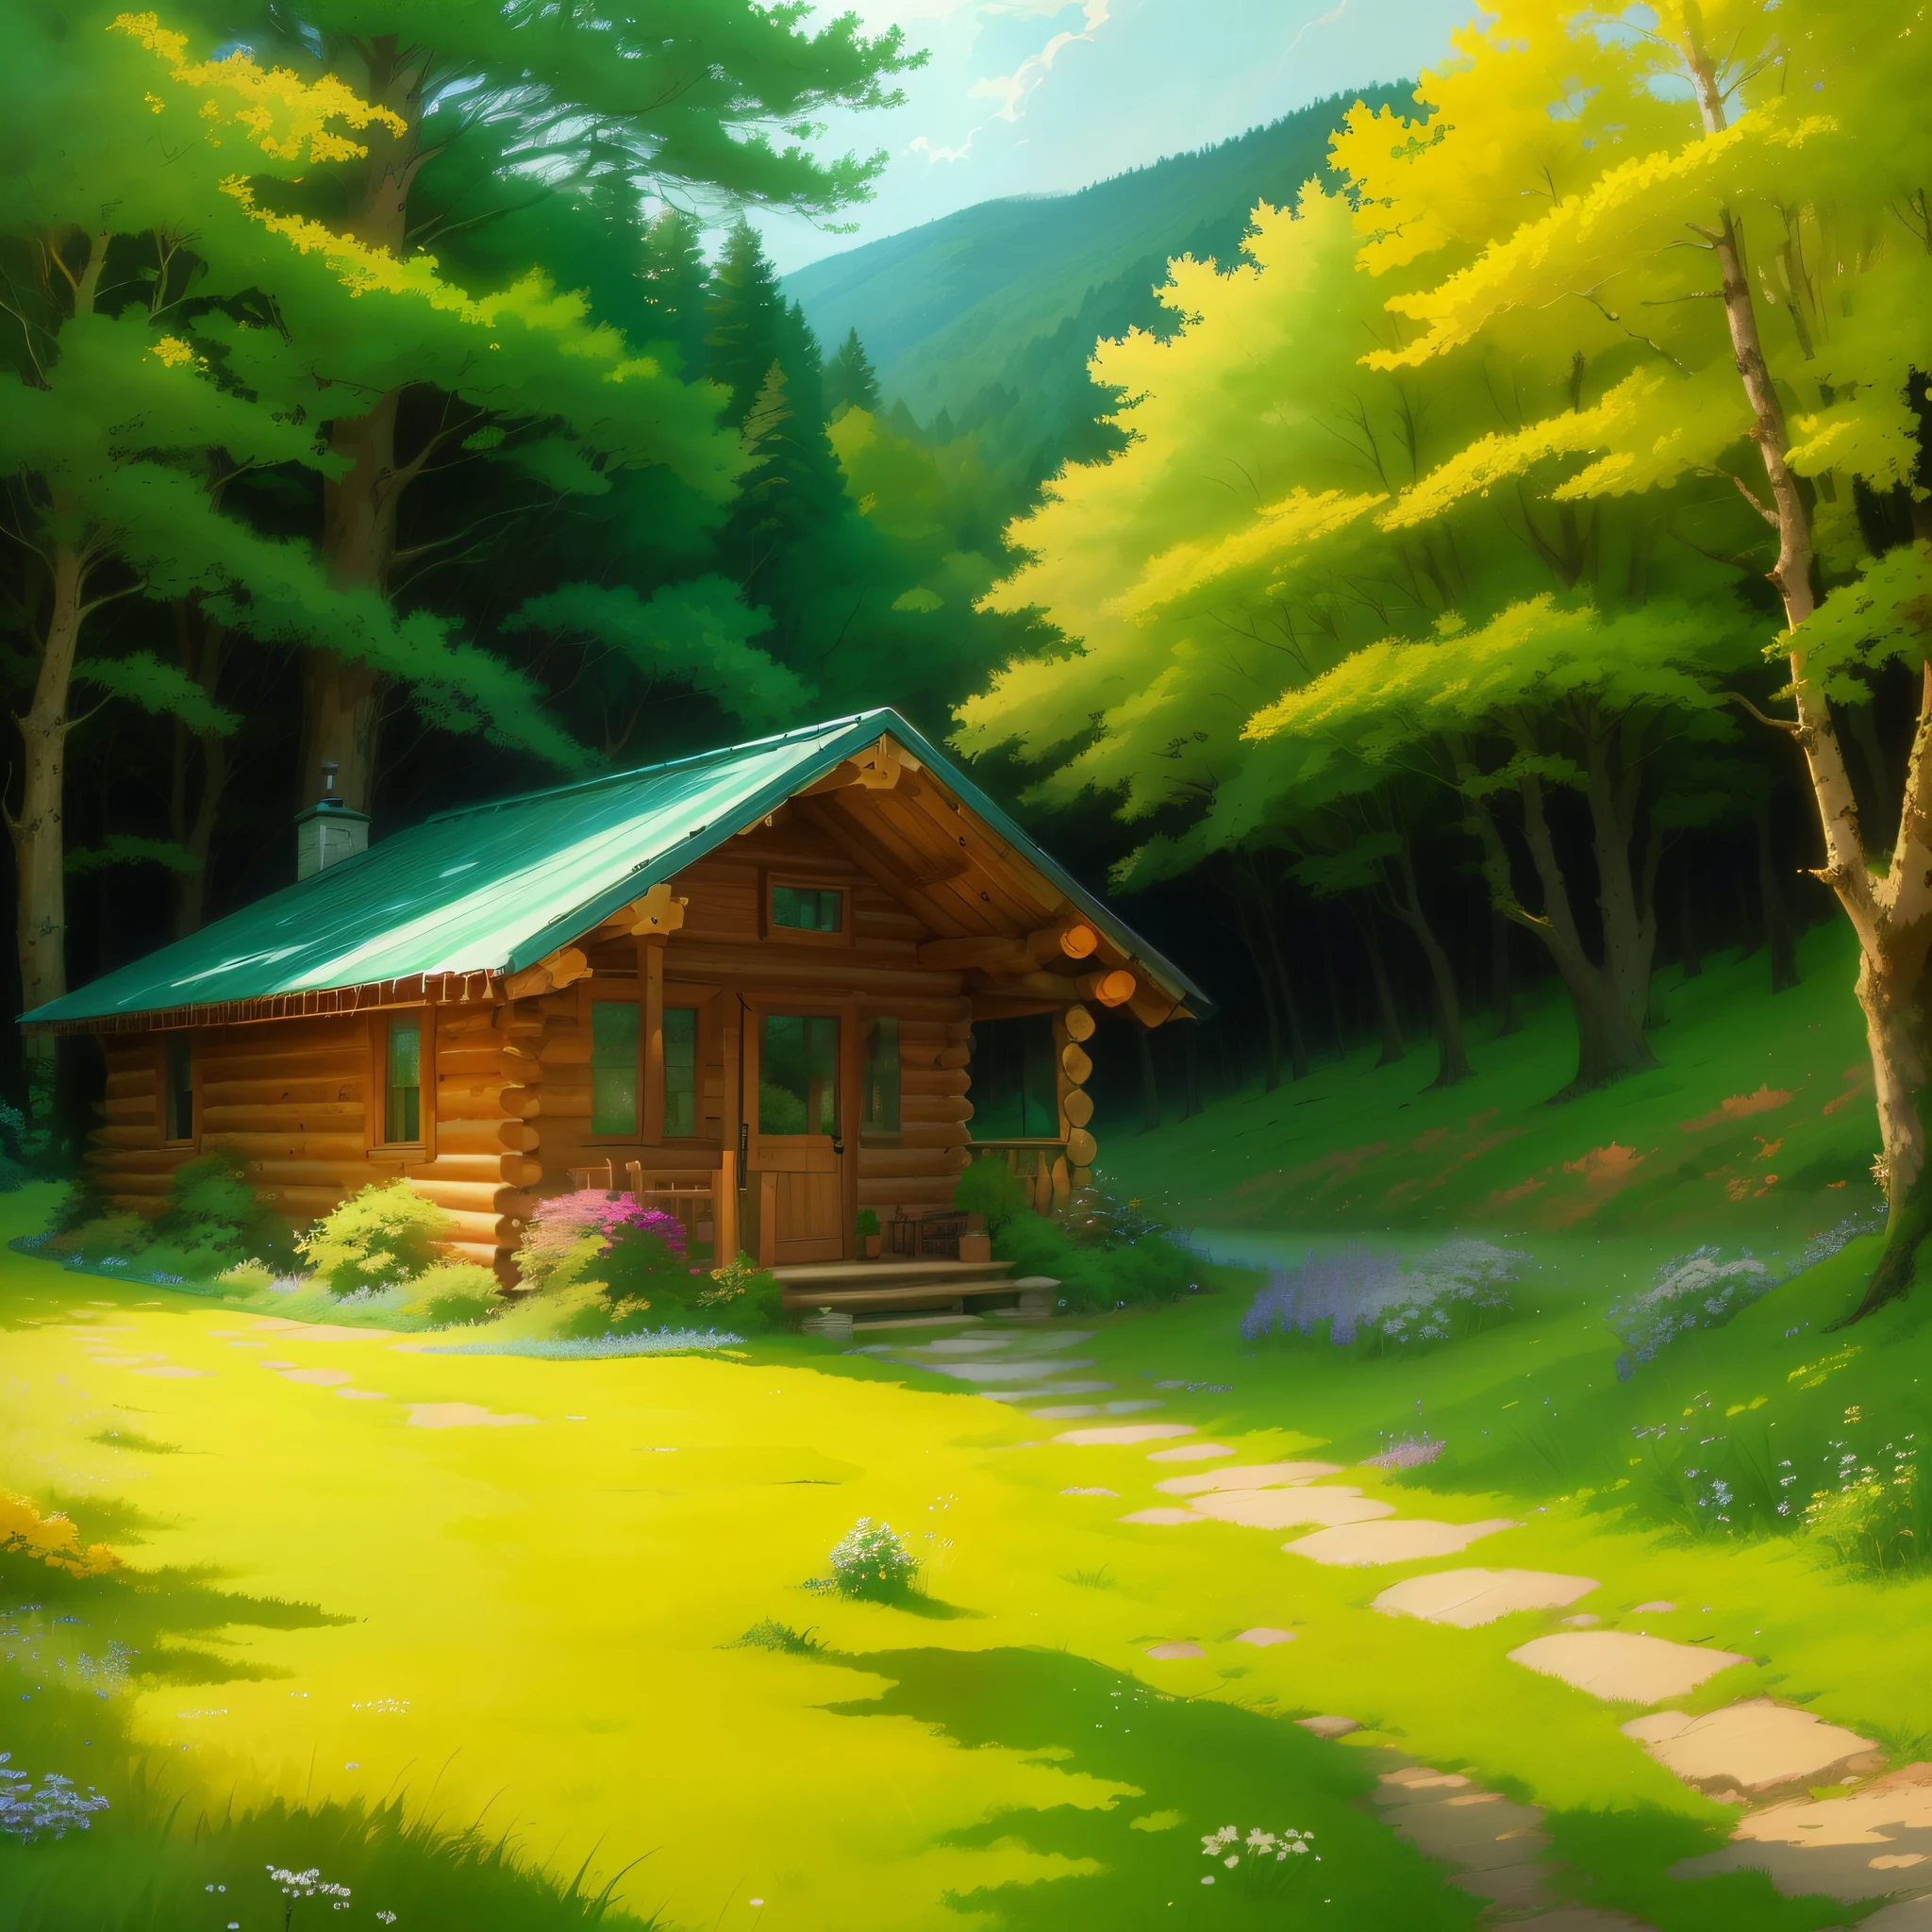 Ghibli Inspired Anime Background in Clip Studio Paint [Timelapse] - YouTube